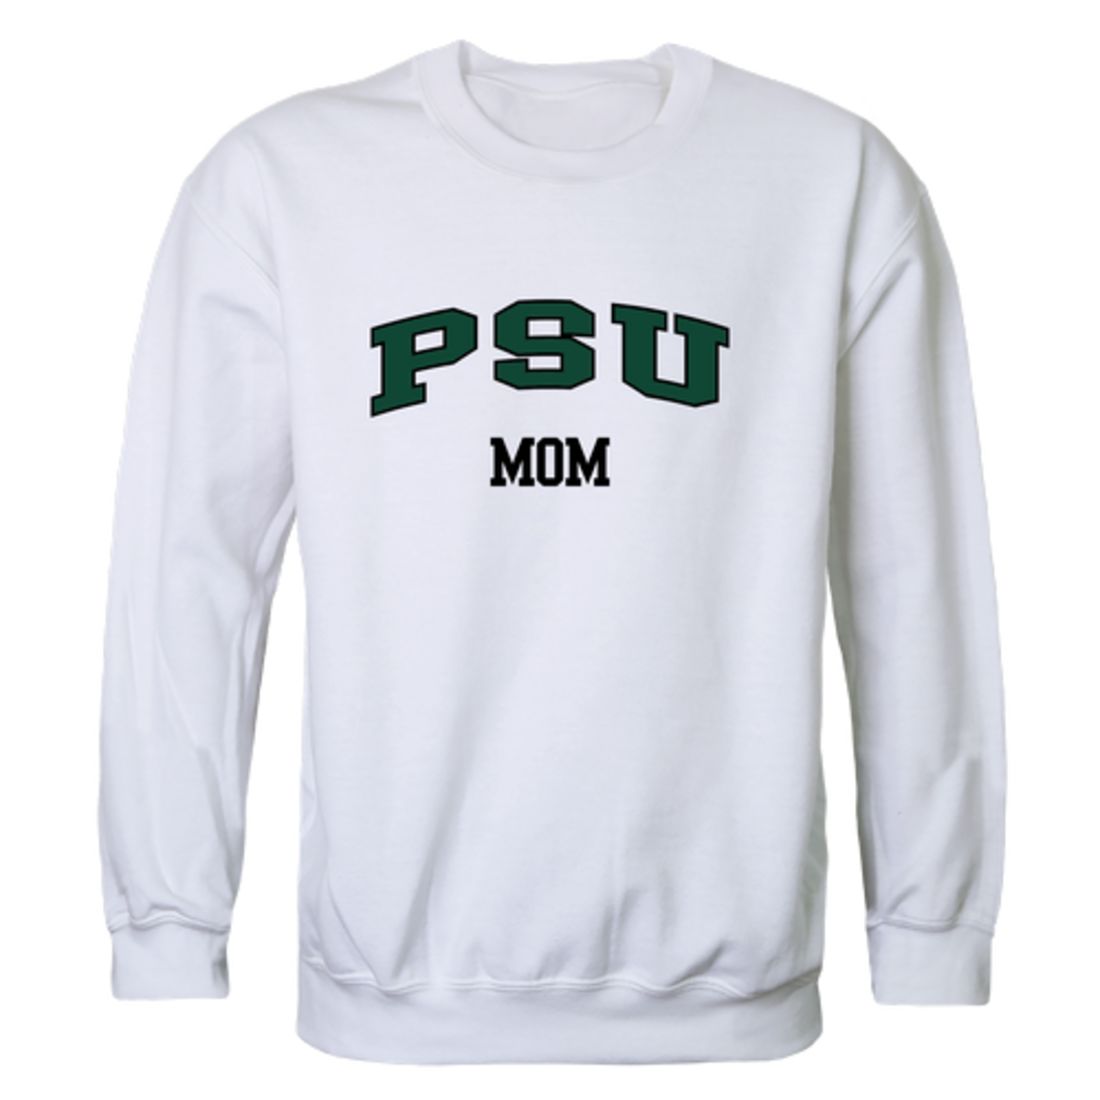 PSU Portland State University Vikings Mom Fleece Crewneck Pullover Sweatshirt Forest Small-Campus-Wardrobe